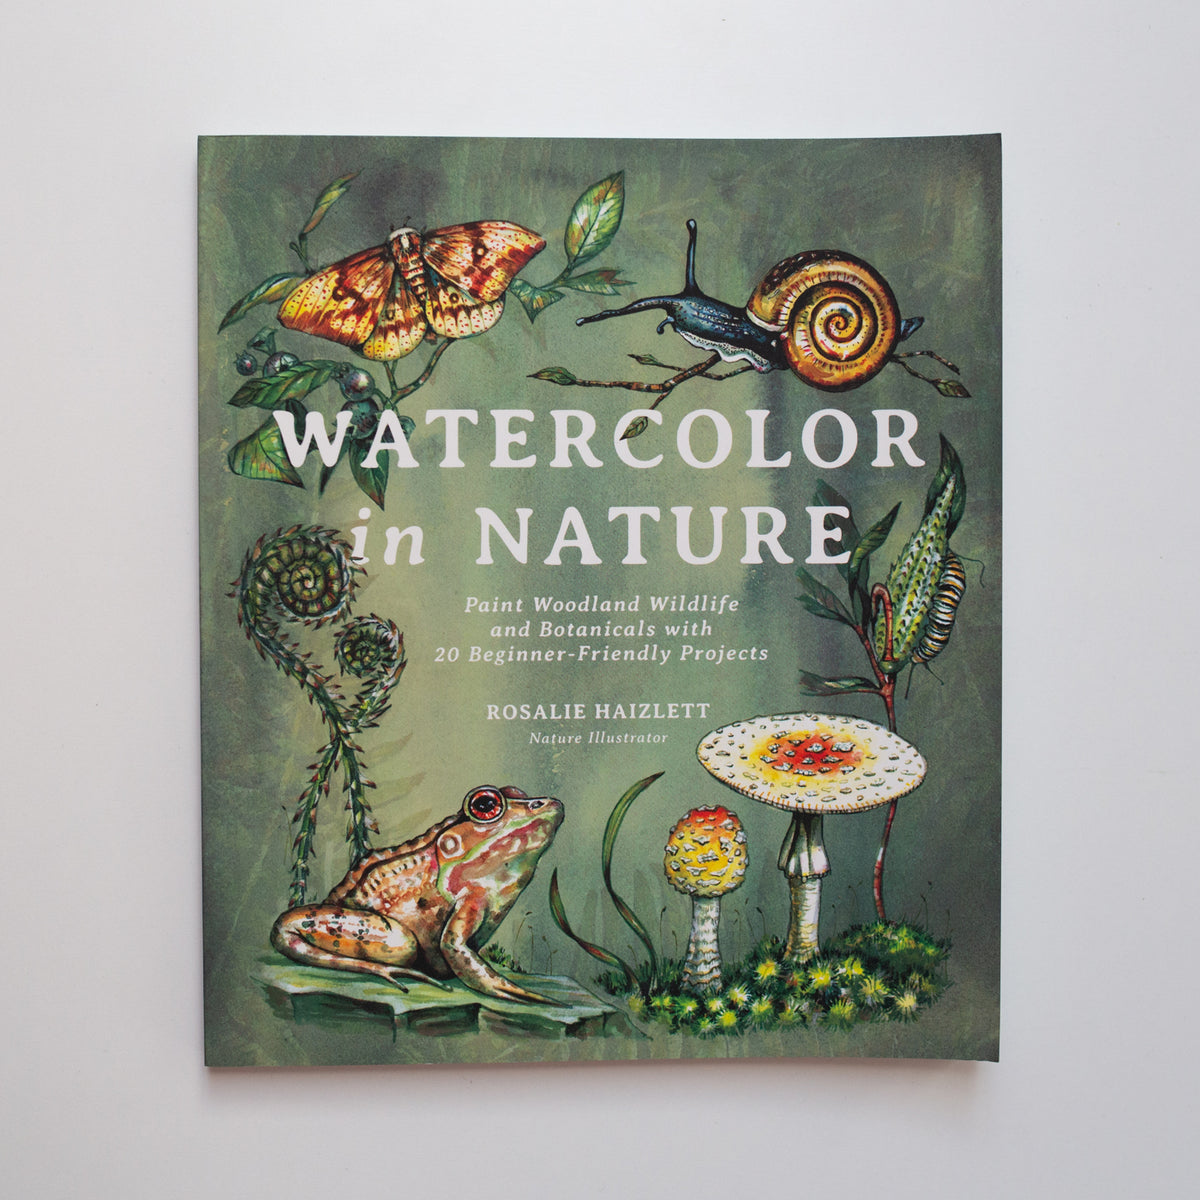 Watercolor in Nature by Rosalie Haizlett